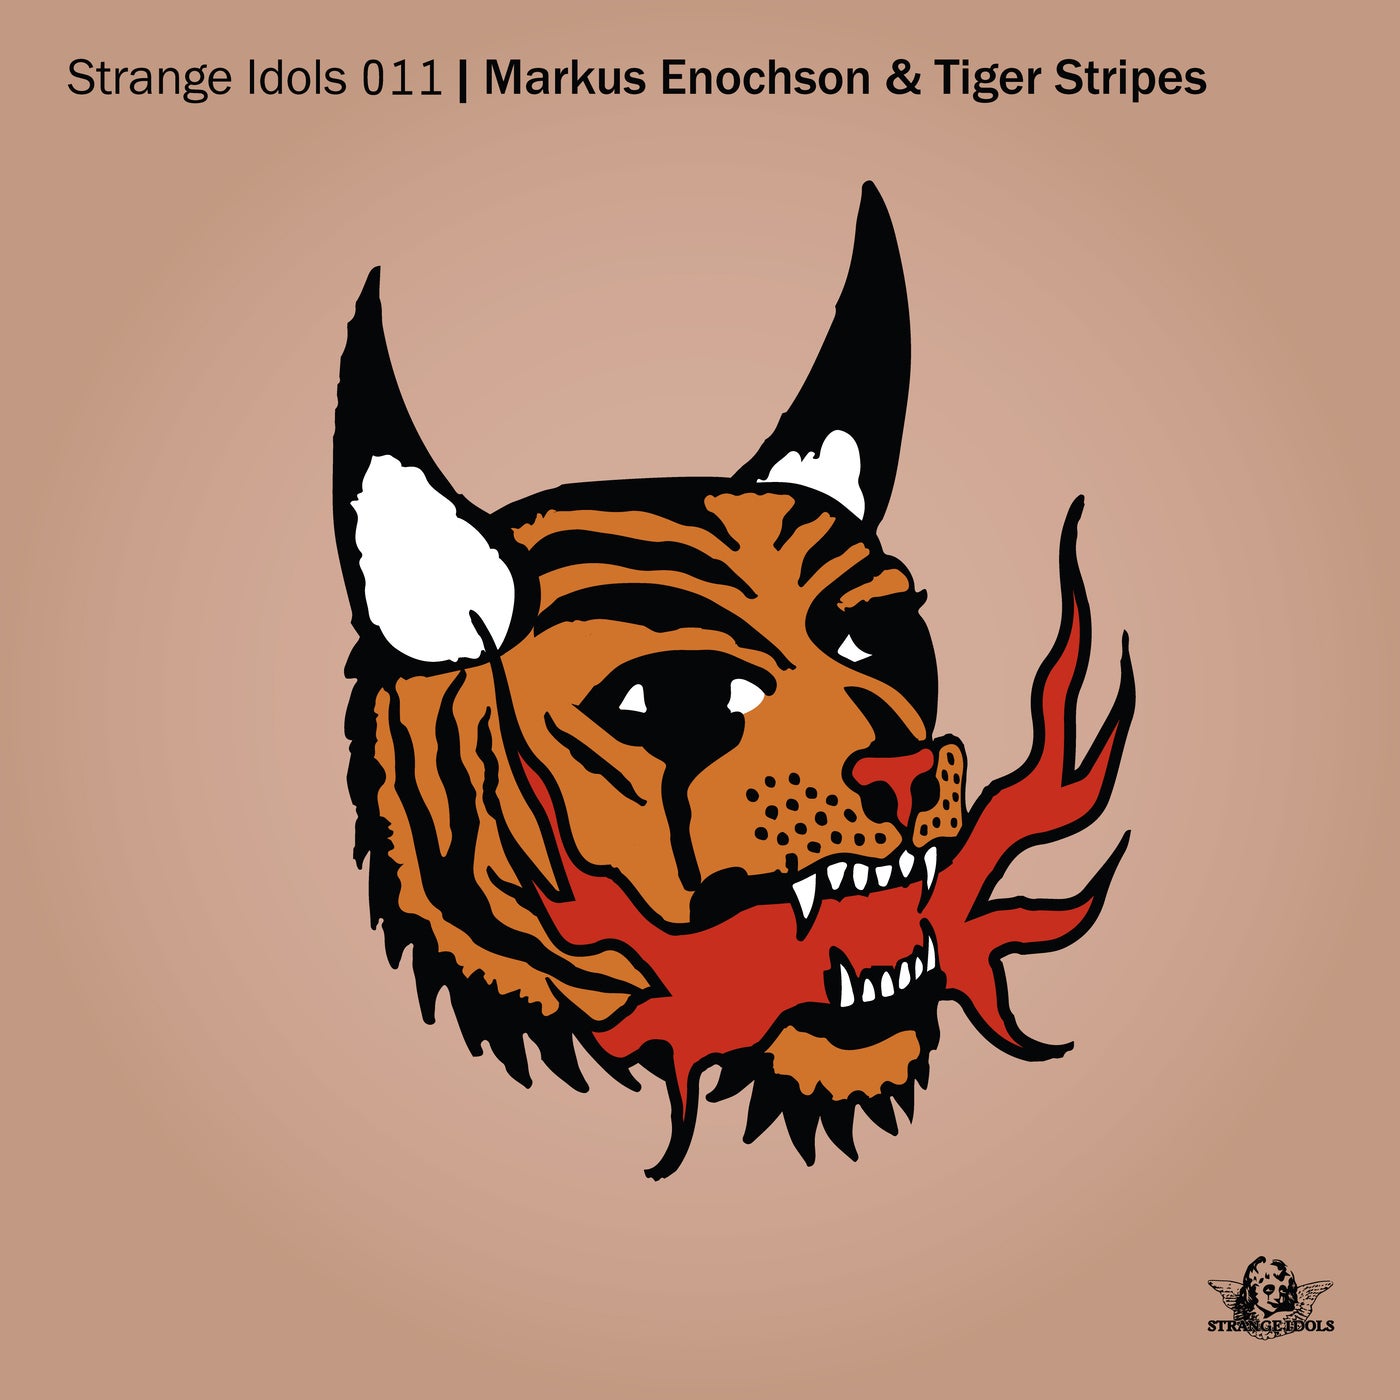 image cover: Tiger Stripes, Markus Enochson - Keep On Burning EP / SIR011